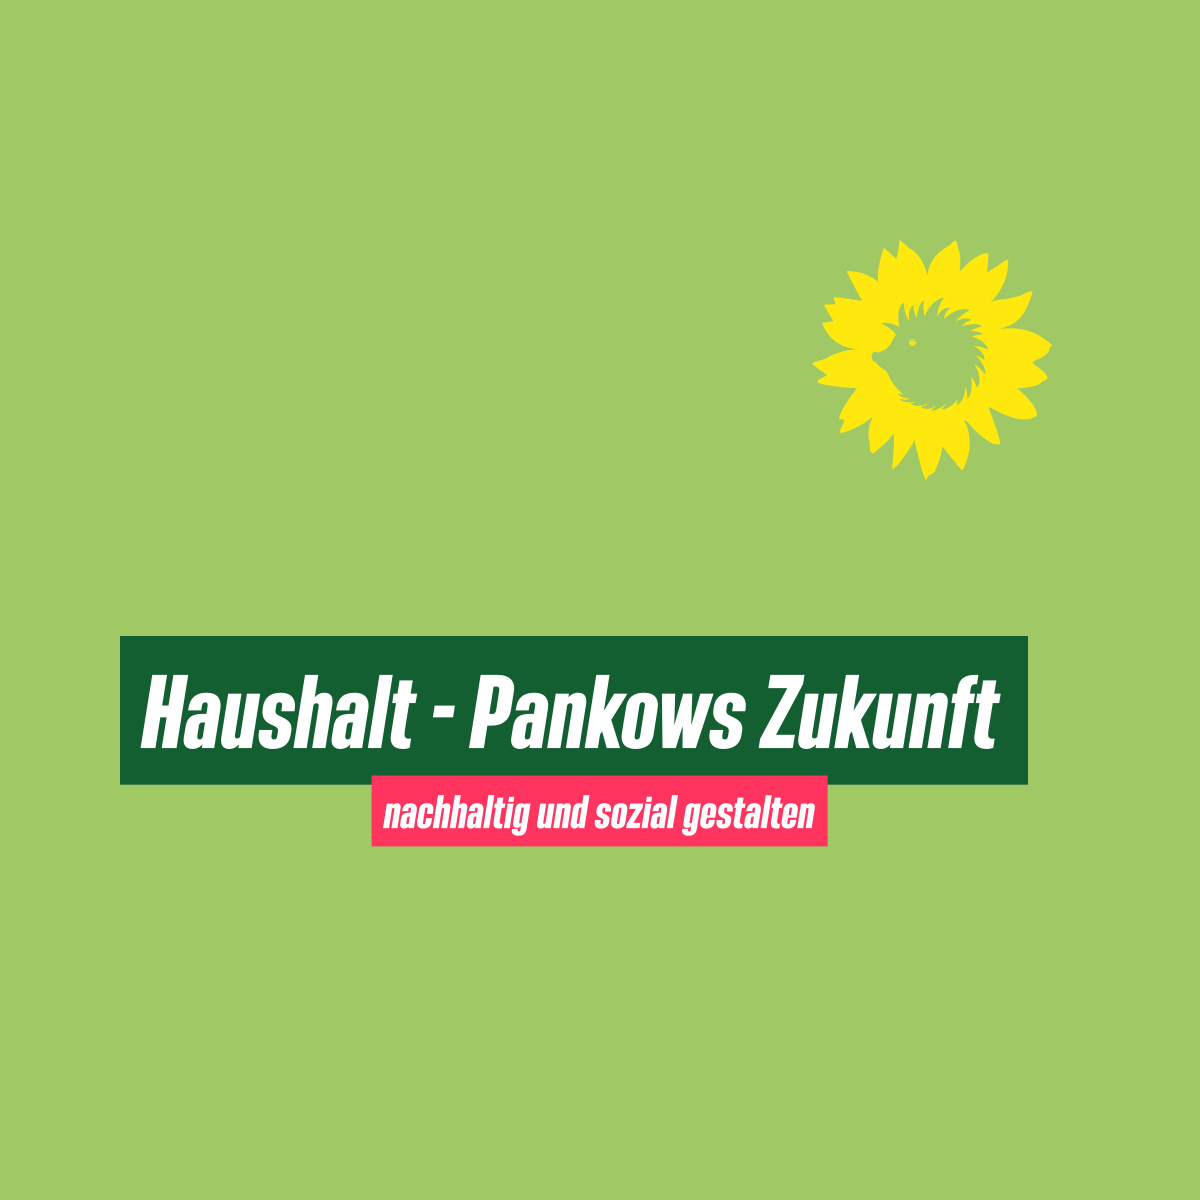 Text: "Haushalt – Pankows Zukunft"